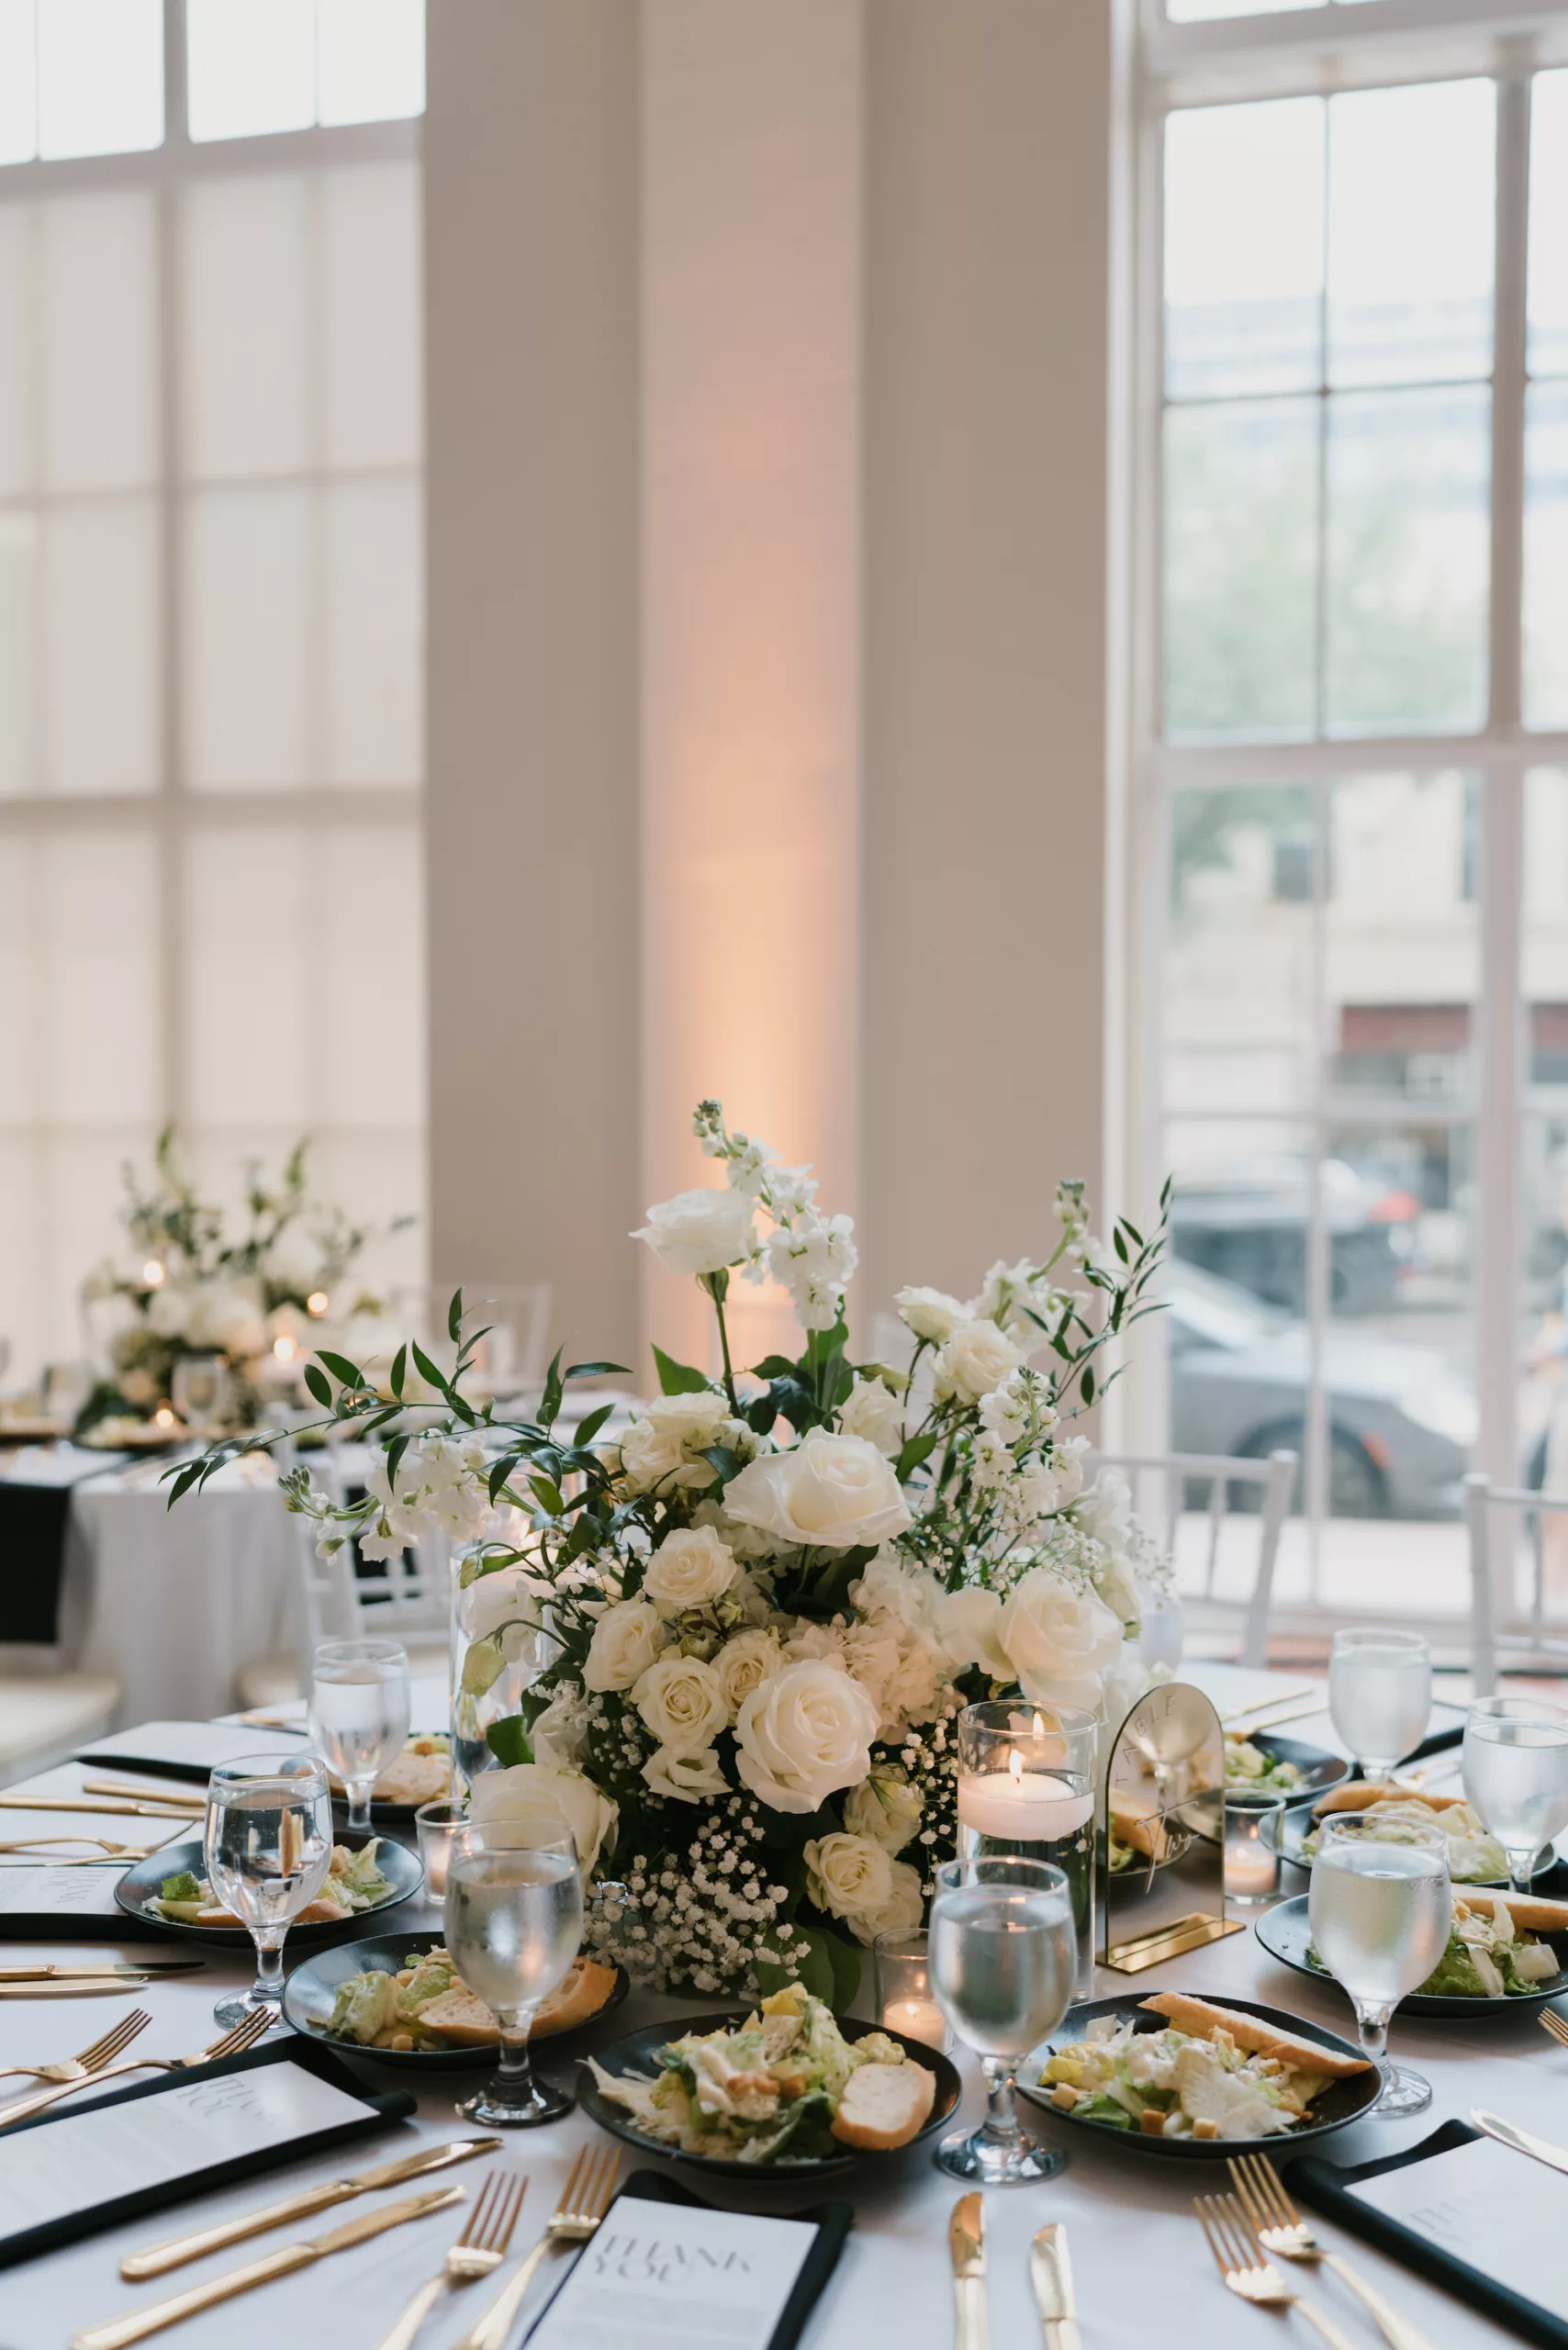 Elegant Spring Wedding Reception Centerpiece Decor Ideas | White Roses, Baby's Breath, and Greenery Flower Arrangement Inspiration